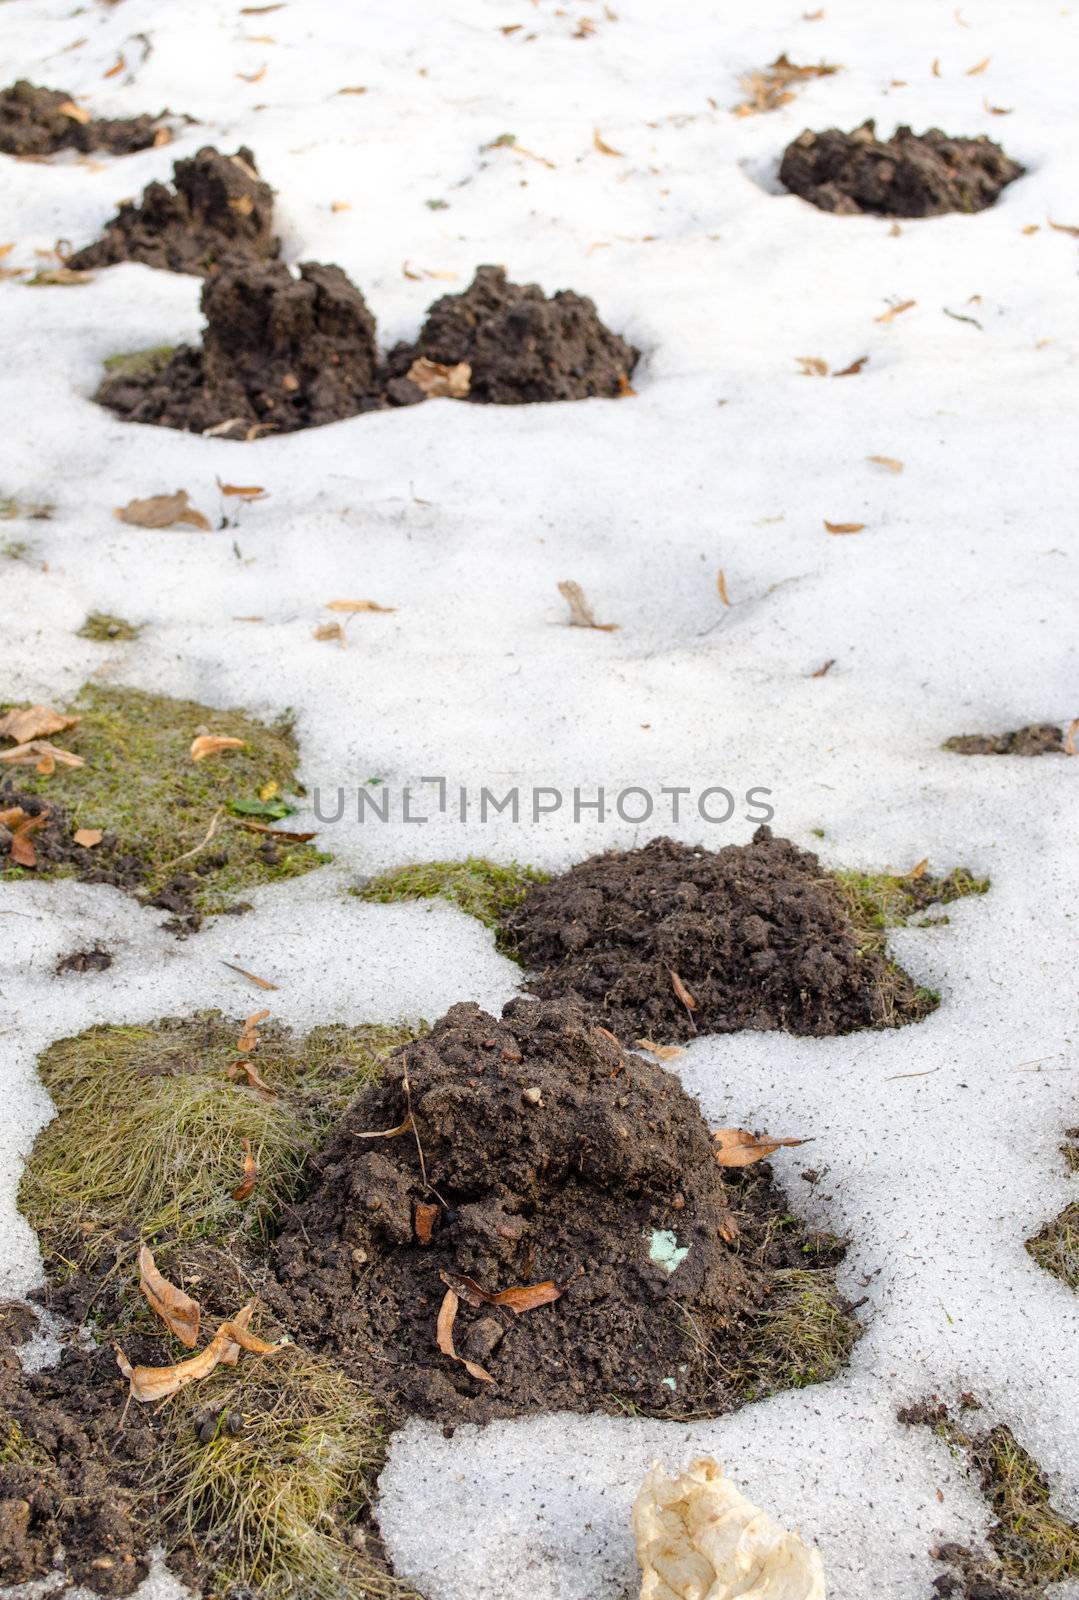 mole molehill between snow lawn grass spring by sauletas